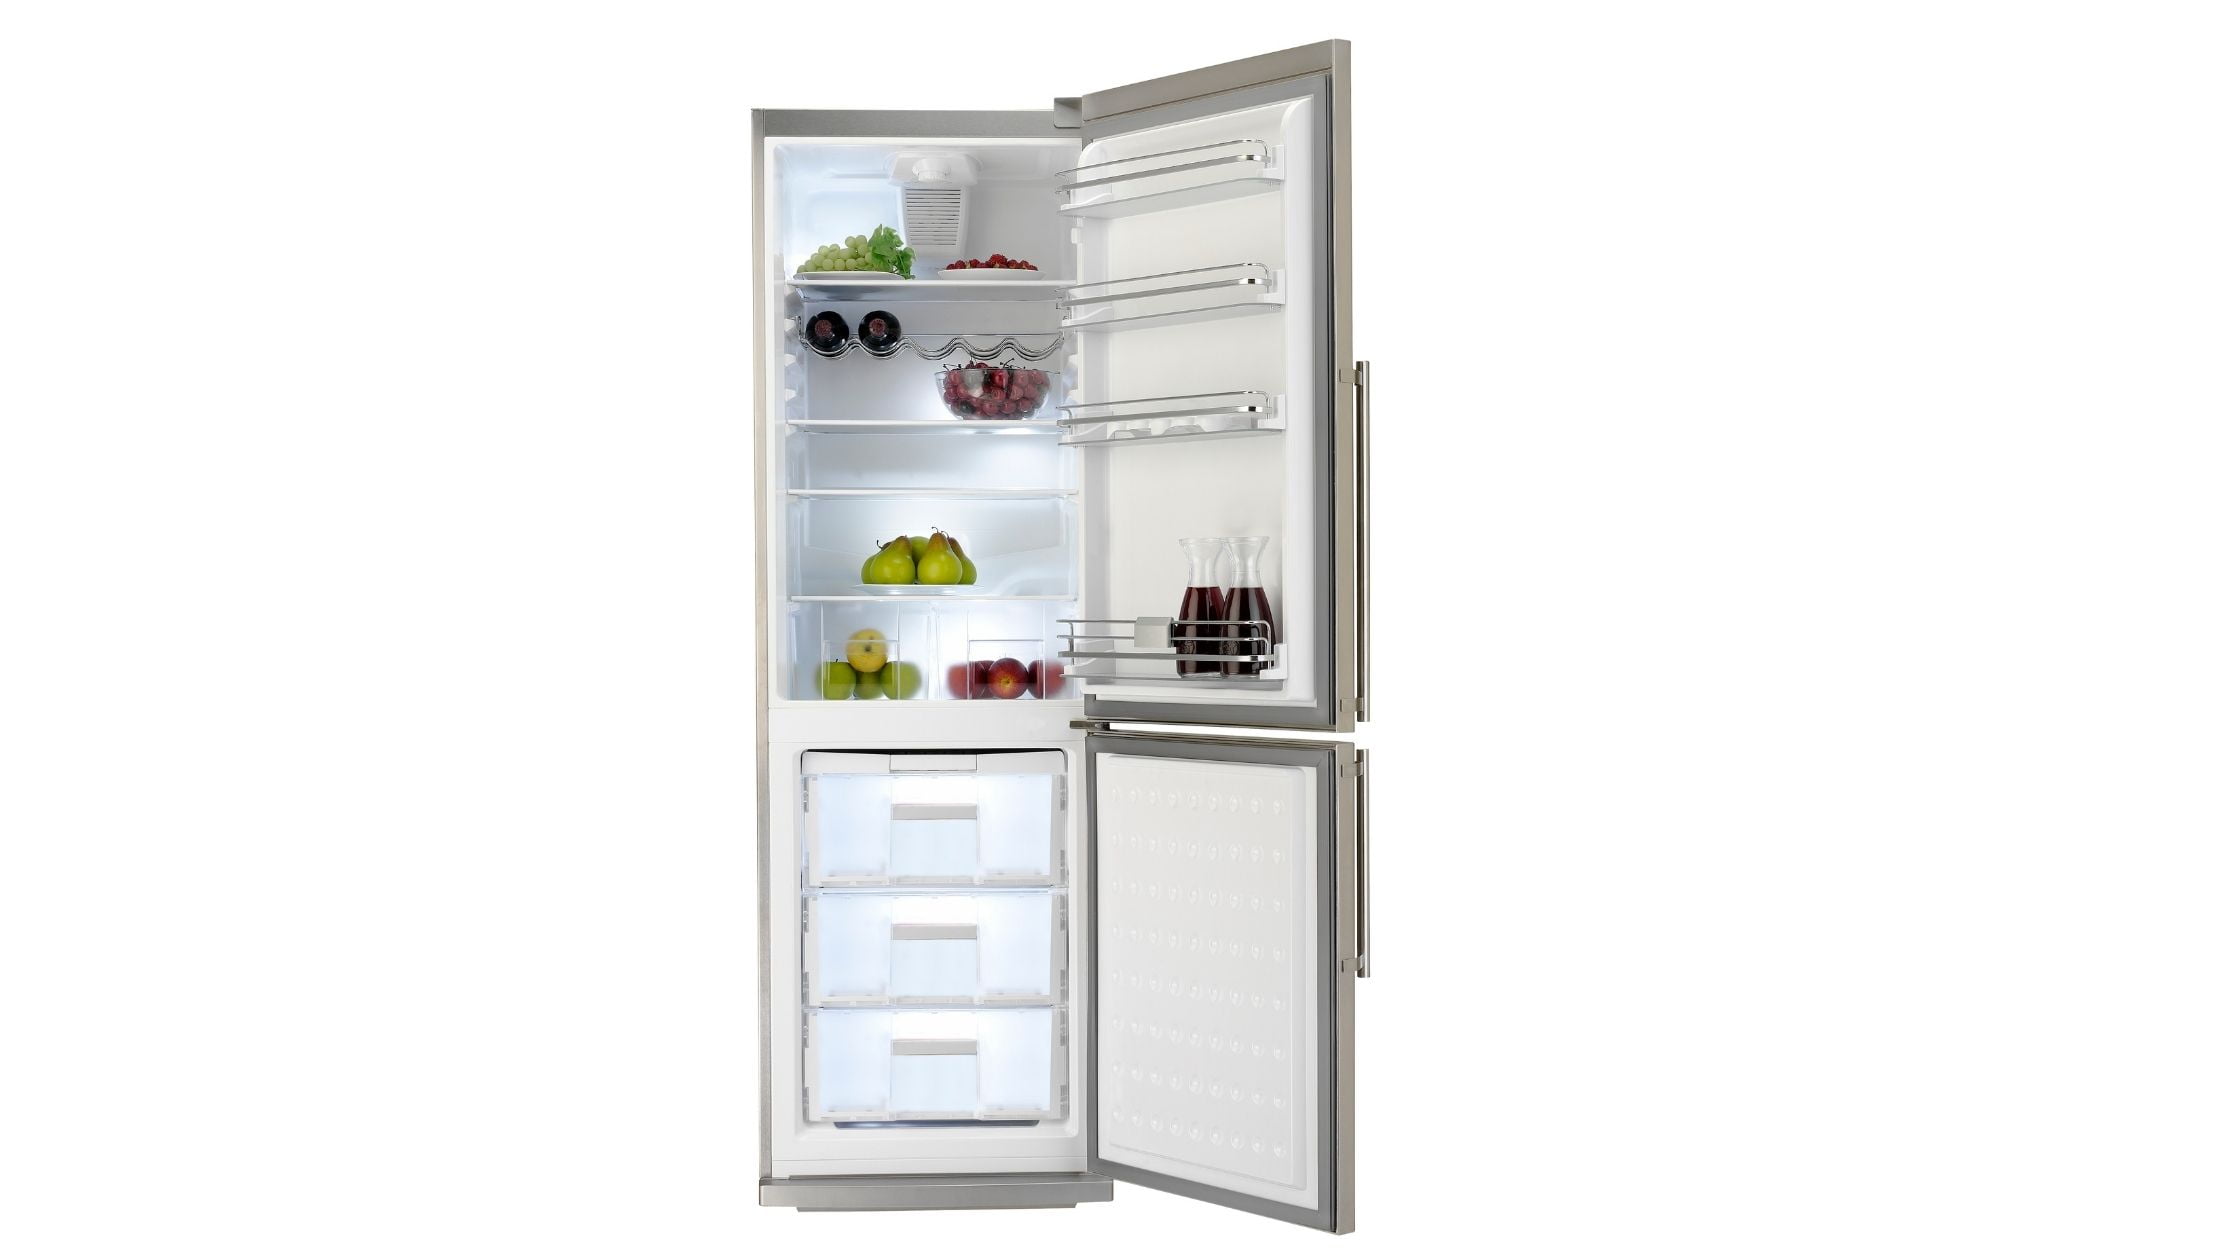 Types of Refrigerators:  Top Freezer or Bottom Freezer Refrigerator